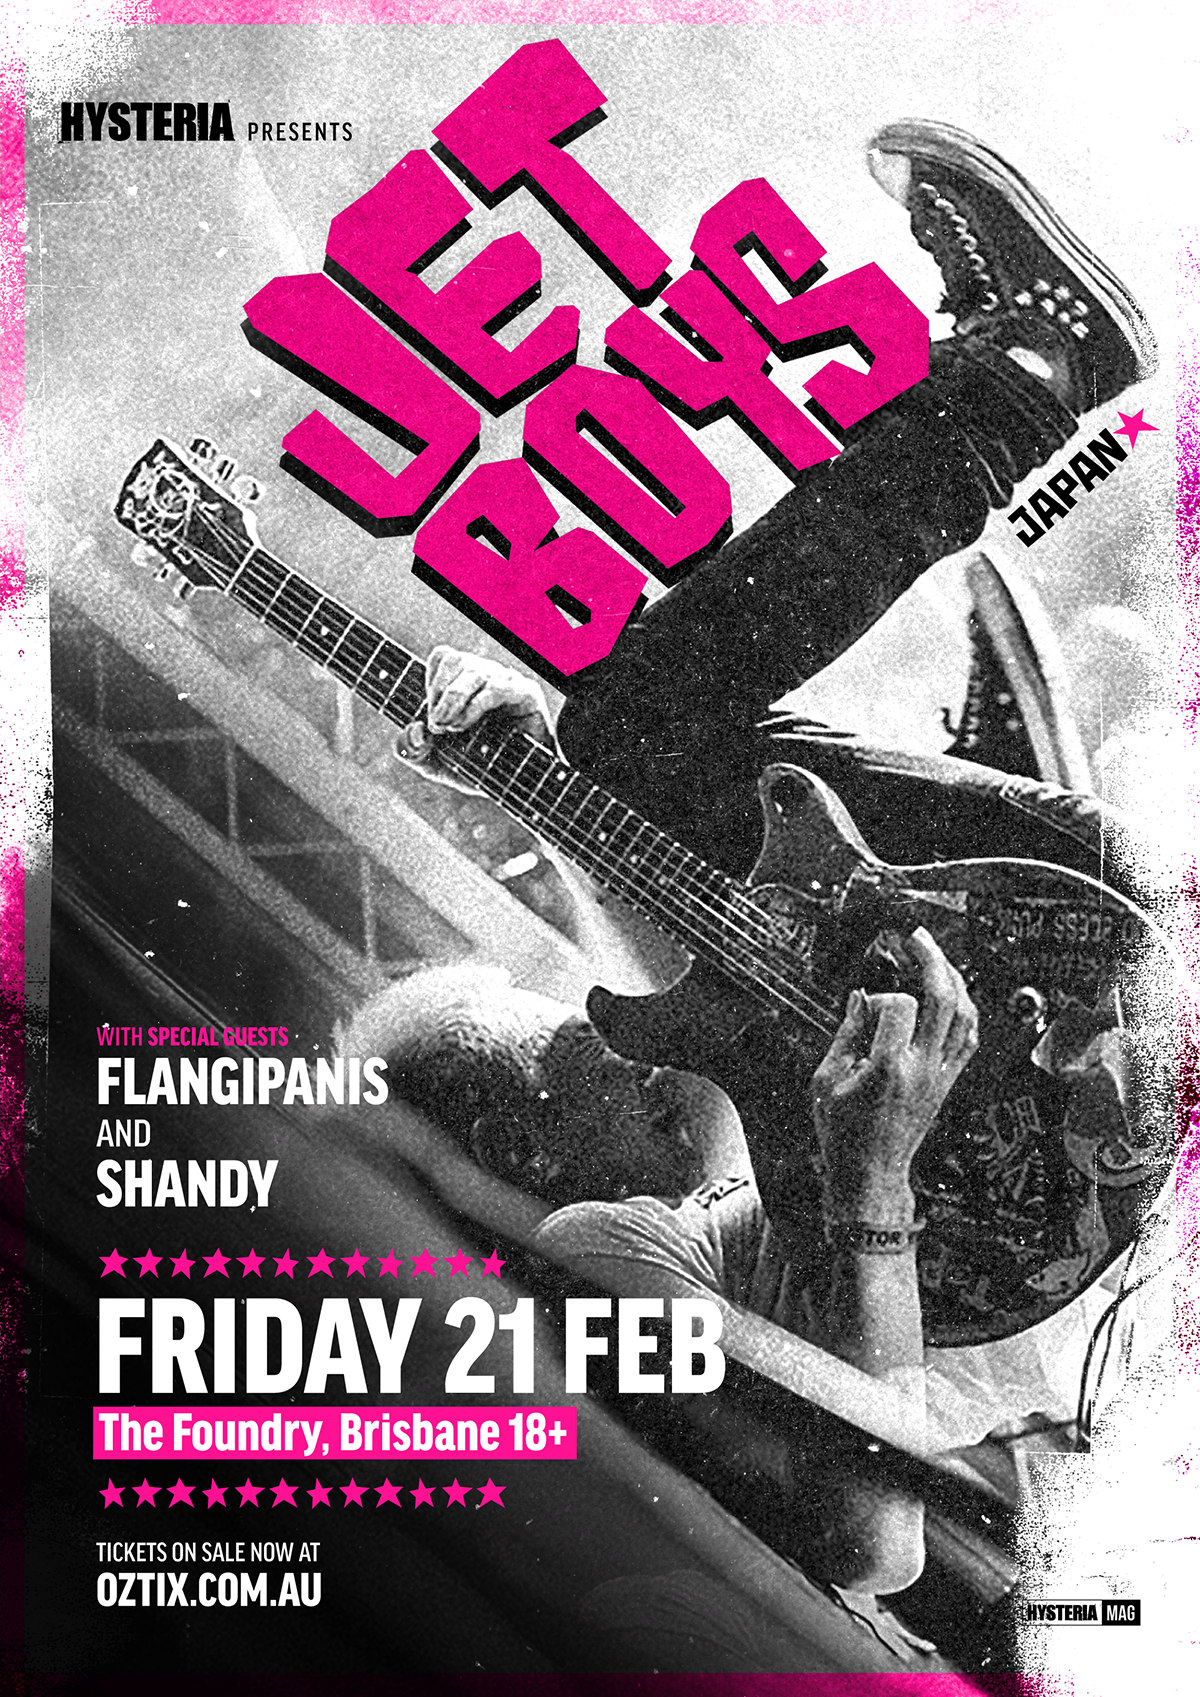 Jetboys Brisbane 21st February 2020